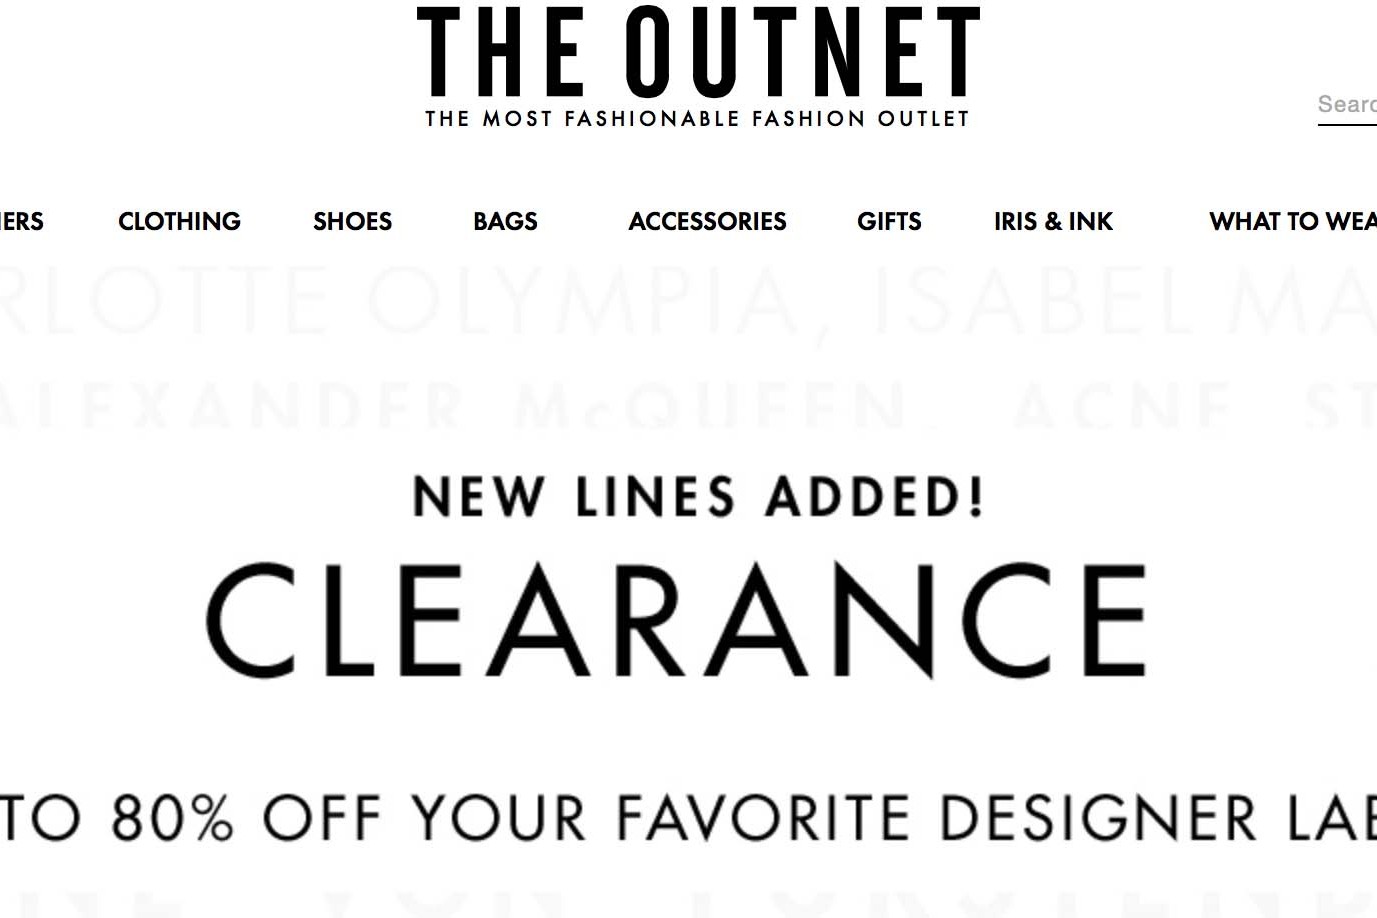 clearance sale hos the outnet